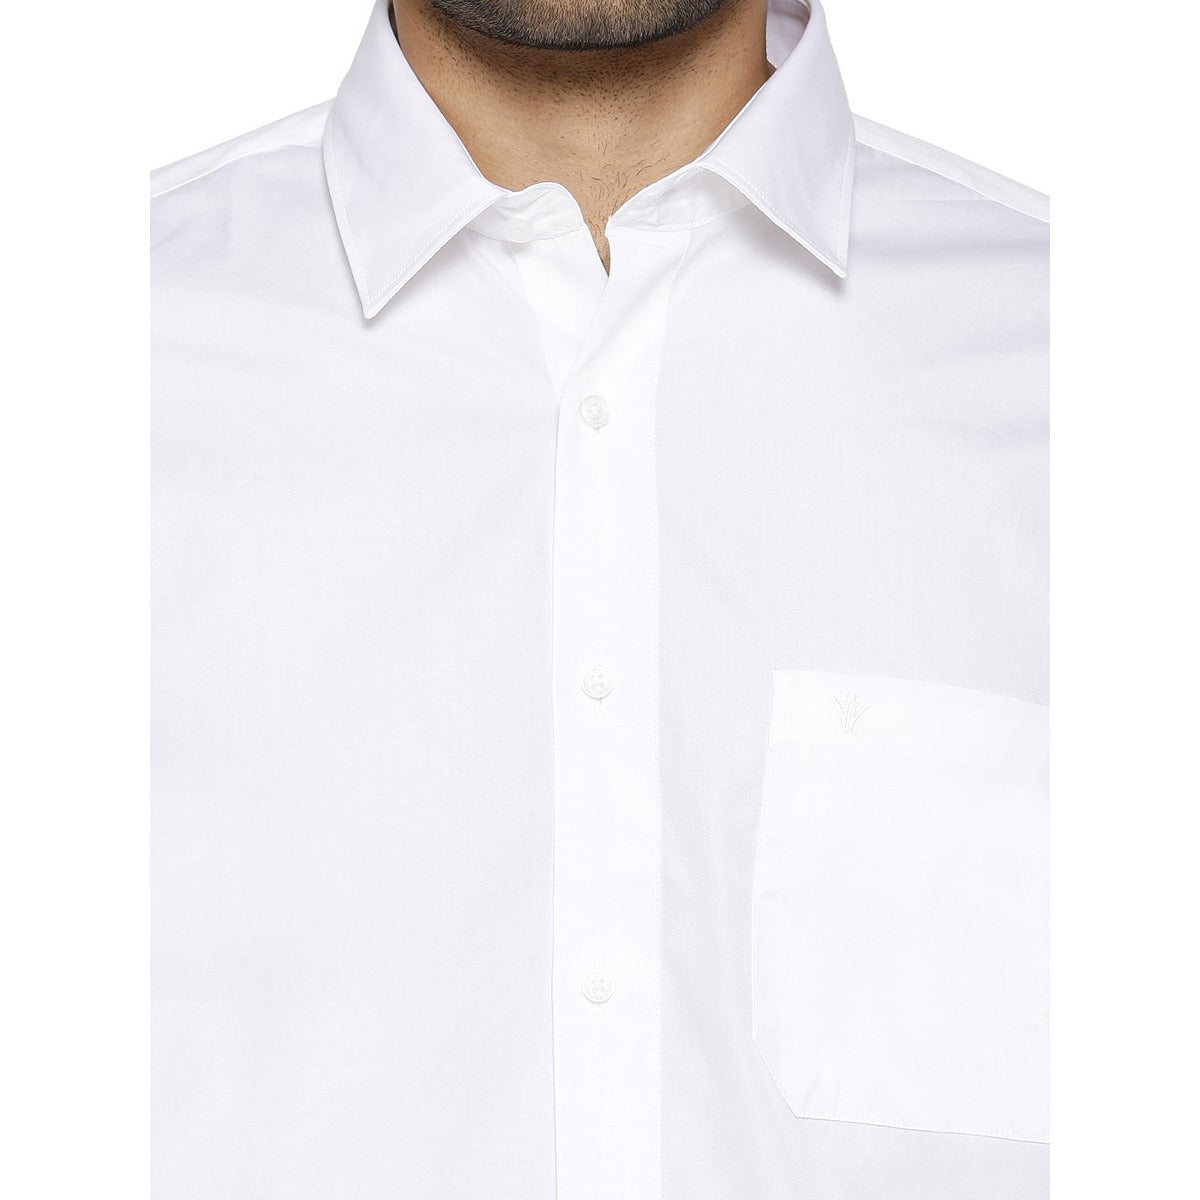 Mens Cotton White Shirt Half Sleeves Royal Cotton-Zoom view